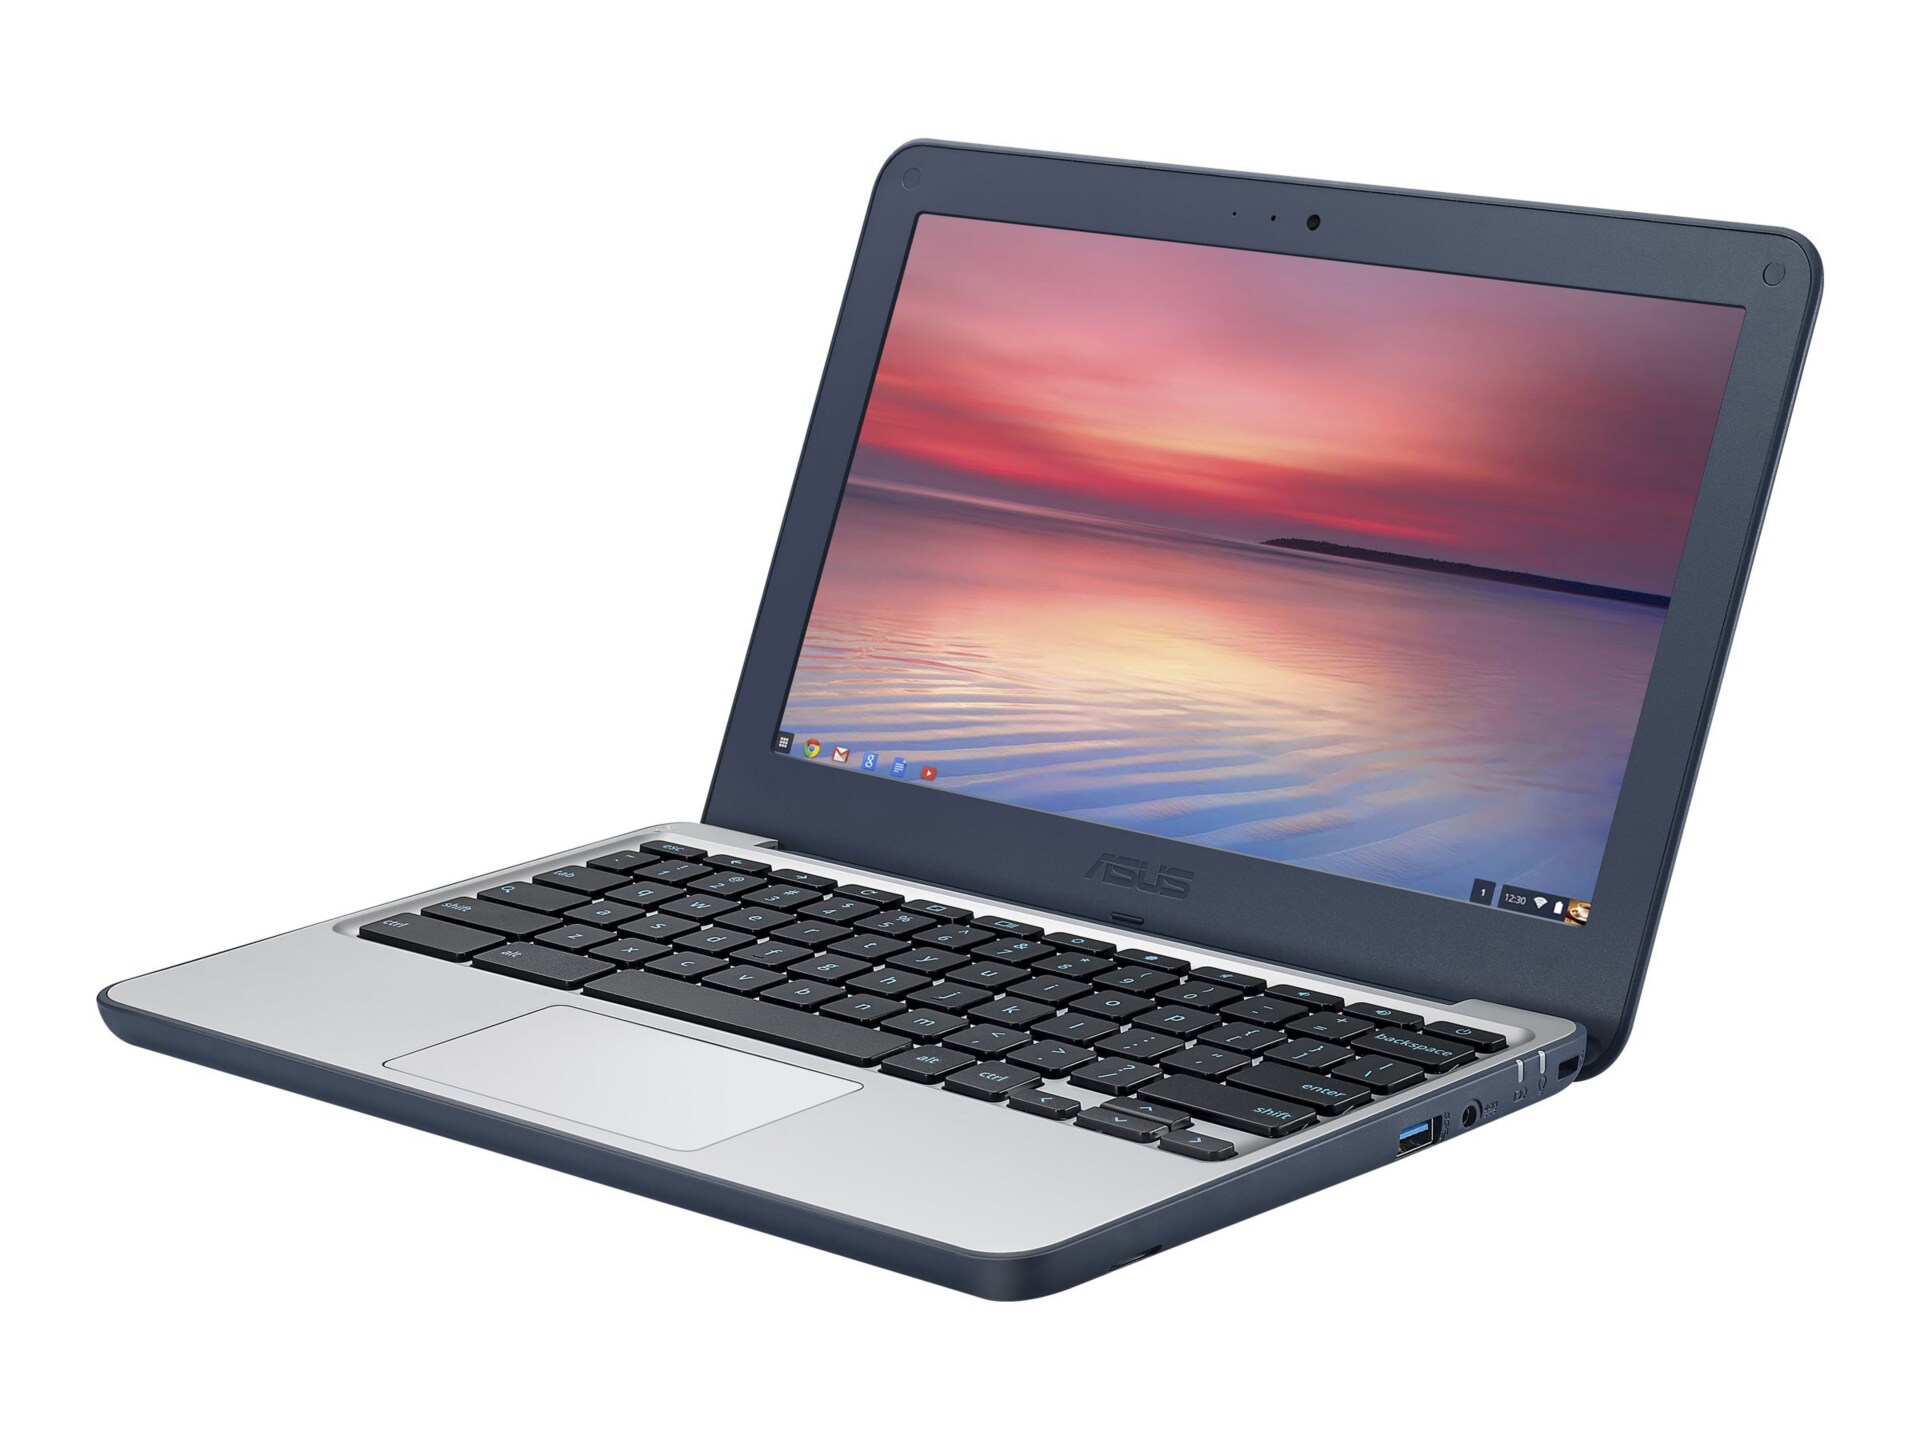 Asus Chromebook C202SA YS02 - 11.6" - Celeron N3060 - 4 GB RAM - 16 GB eMMC